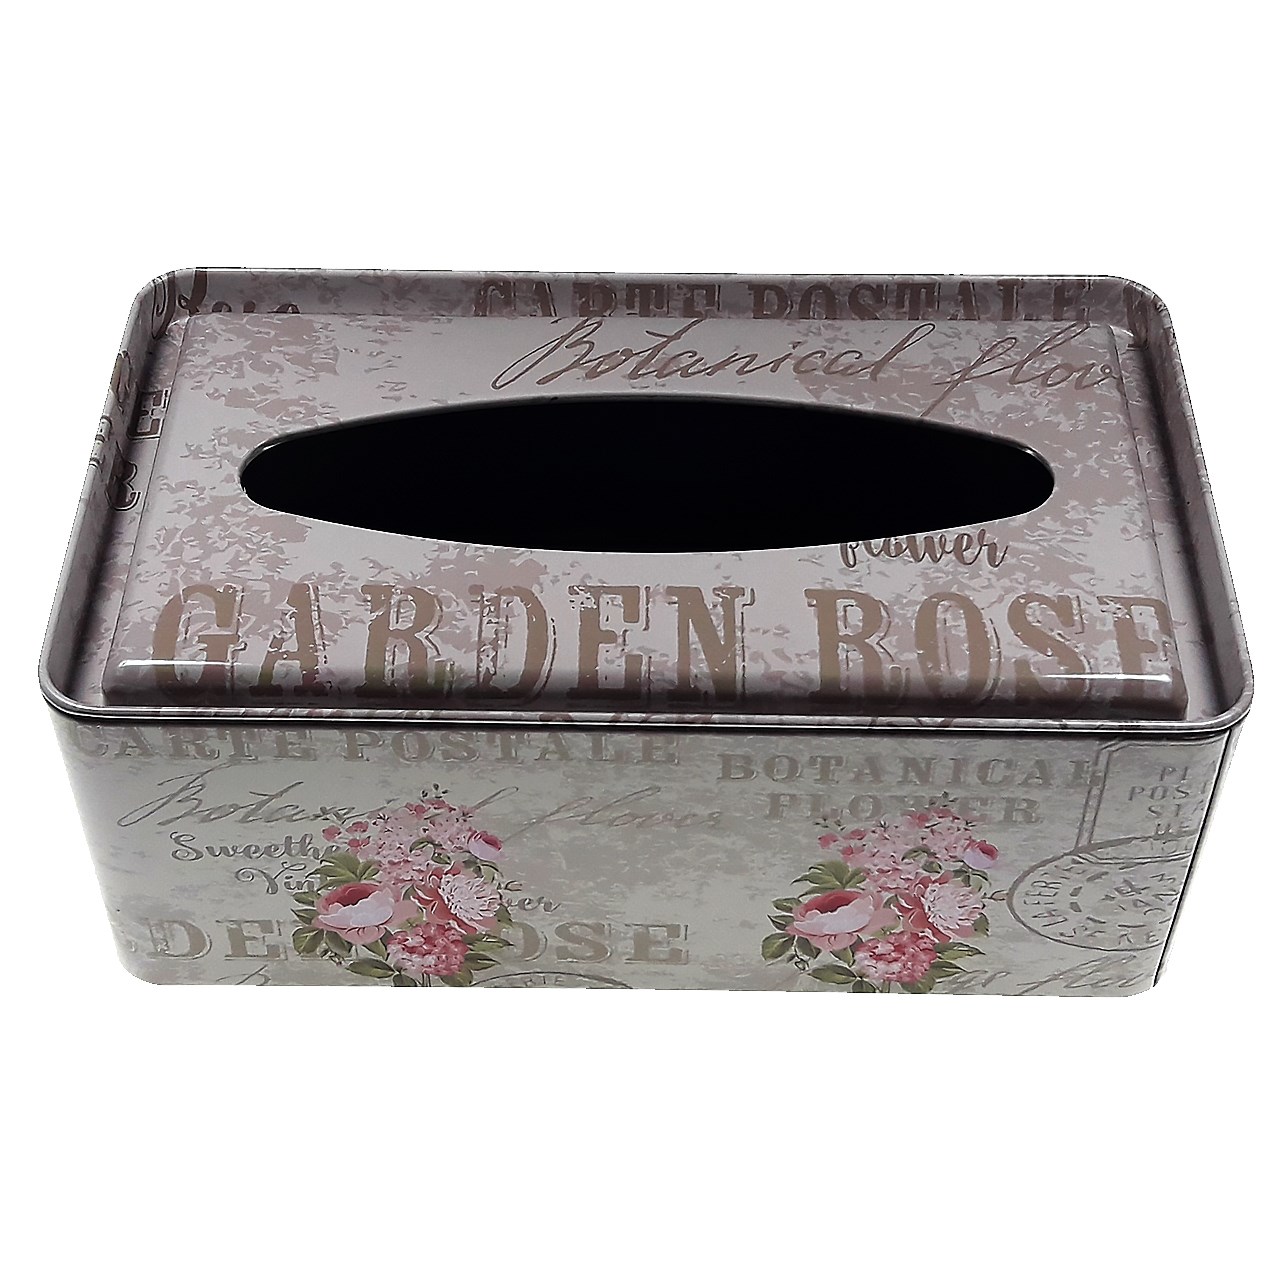 جعبه دستمال کاغذی نوژا مدل Garden Rose